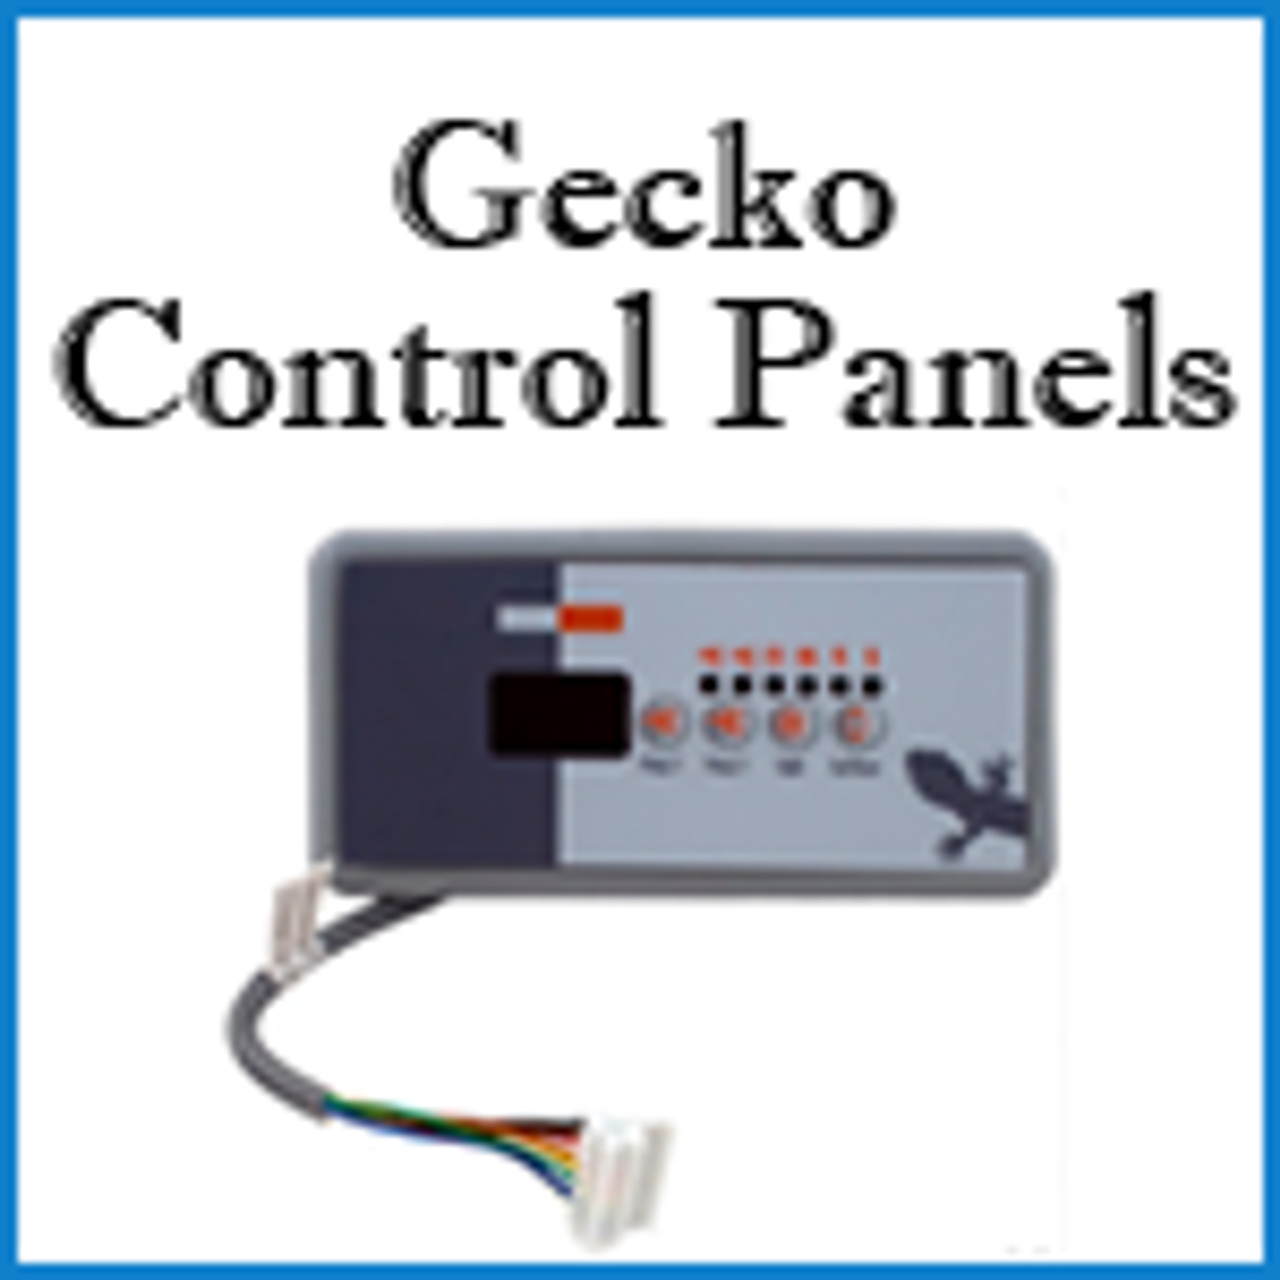 Gecko Control Panels